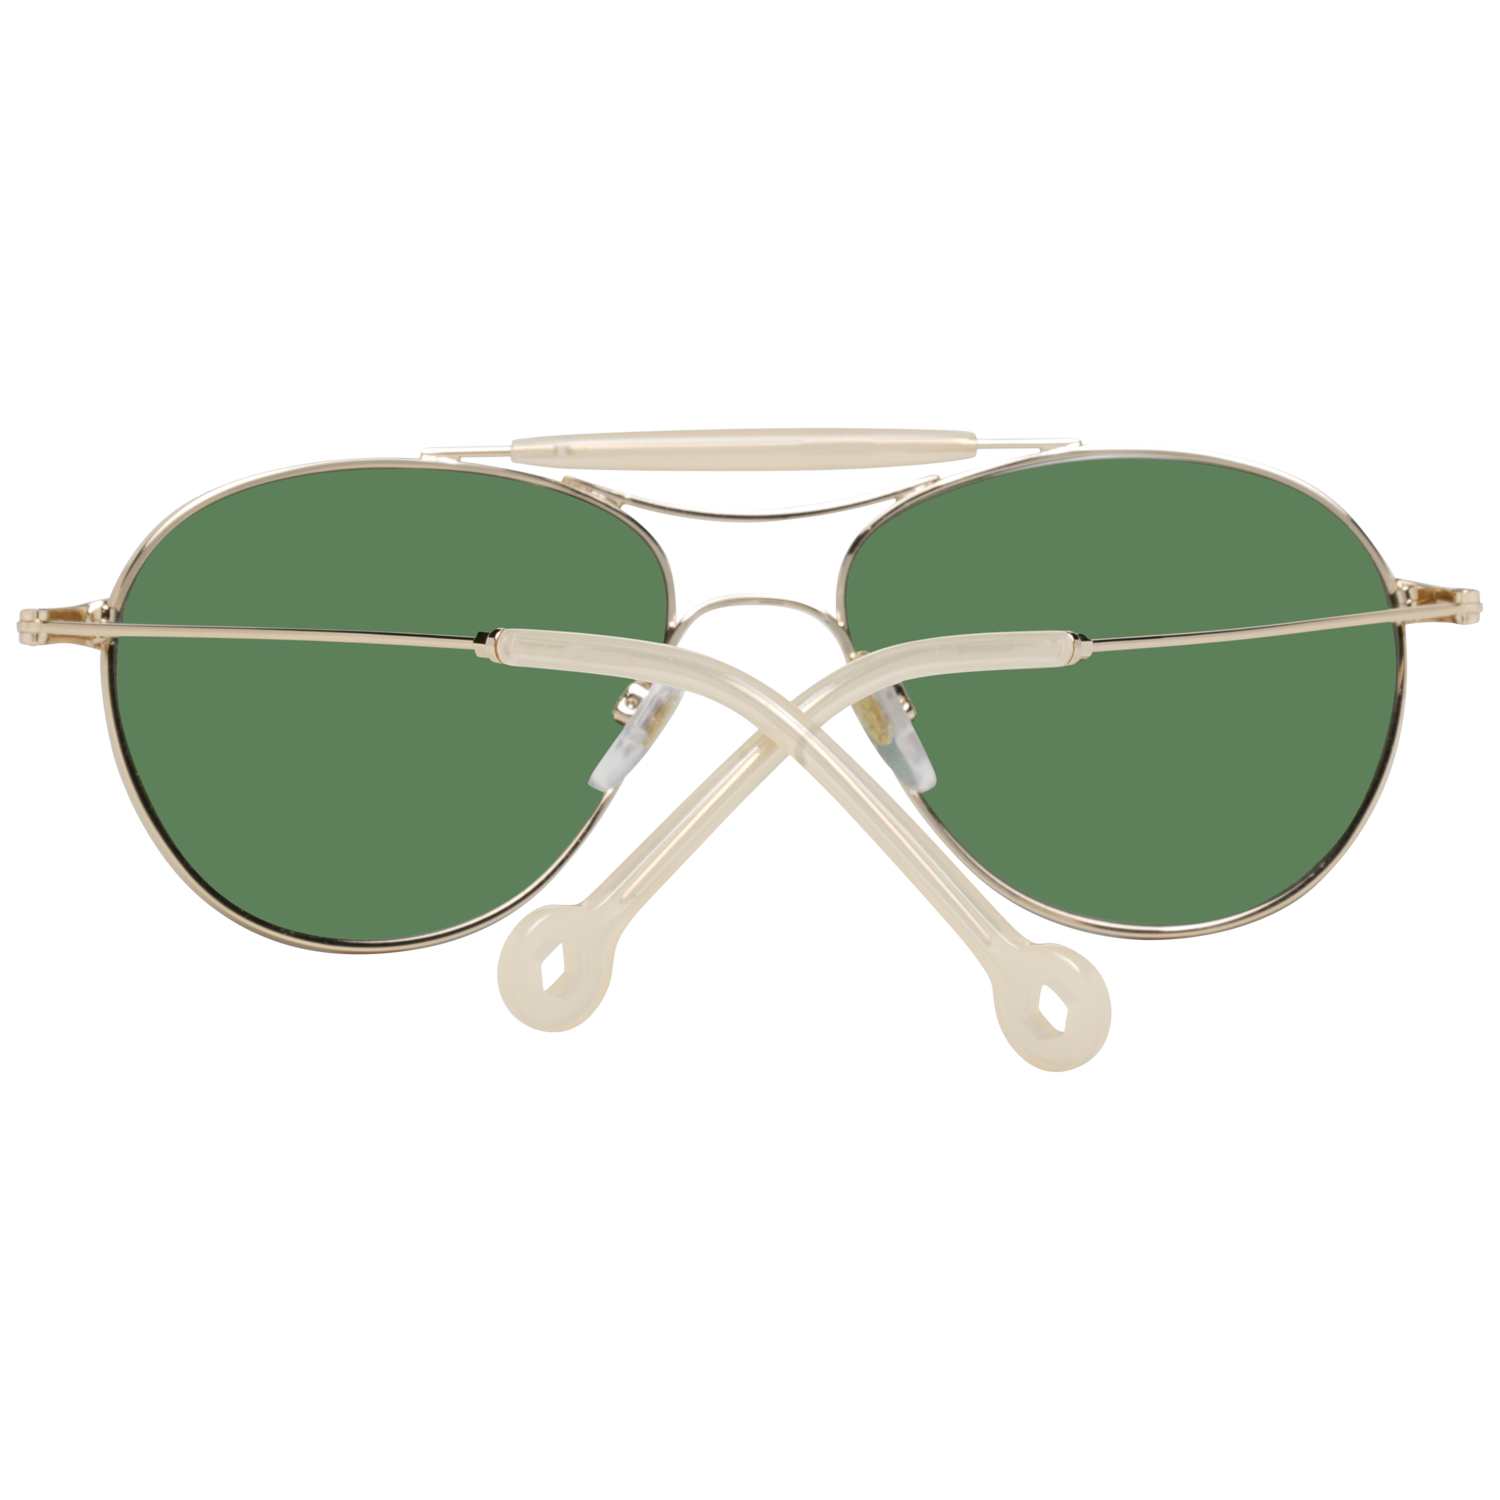 Hally & Son Sunglasses Hally & Son Sunglasses DH501S 02 56 Eyeglasses Eyewear UK USA Australia 